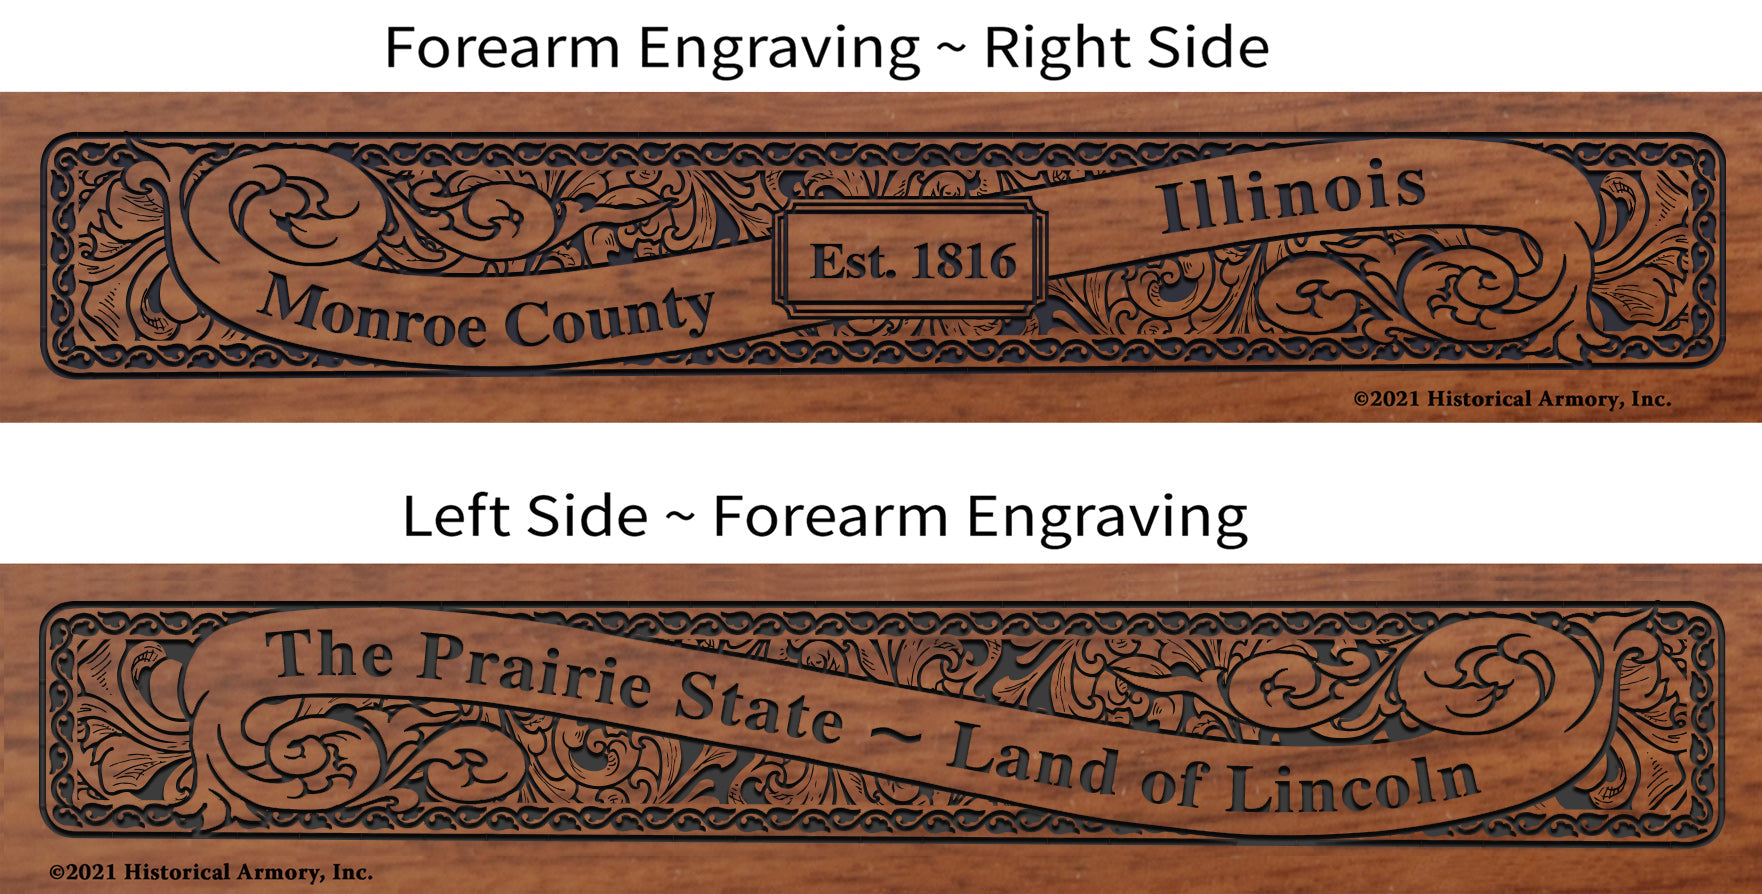 Monroe County Illinois Establishment and Motto History Engraved Rifle Forearm